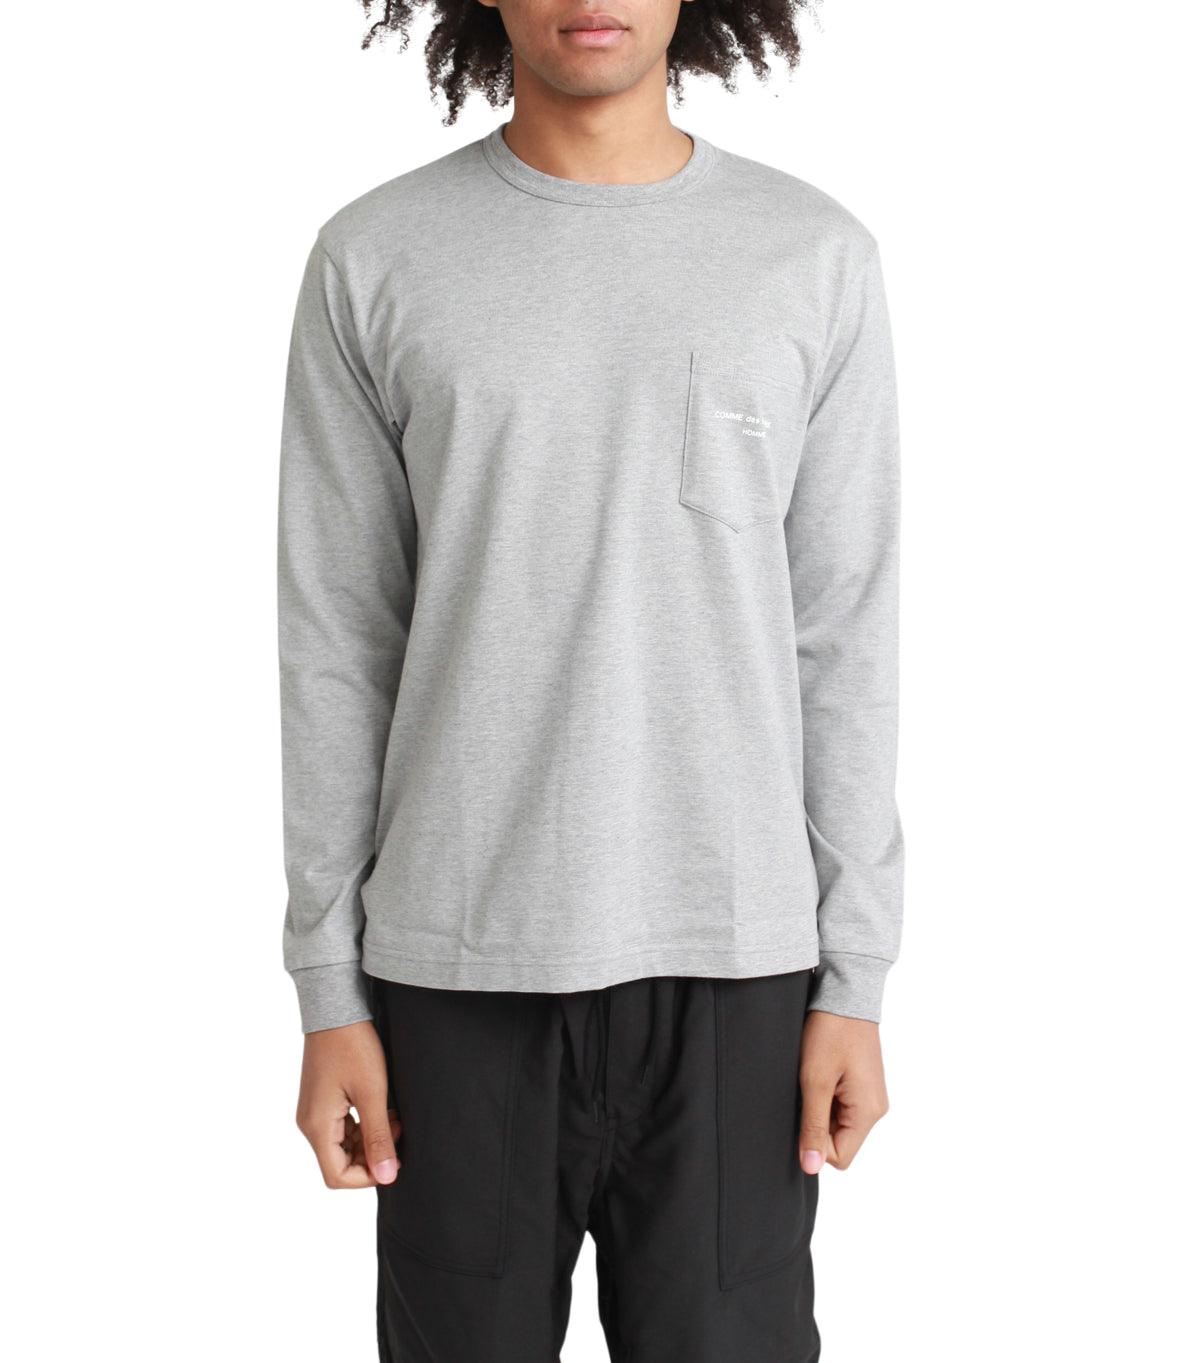 CdG Homme Pocket T-Shirt Long Sleeve Top Gray